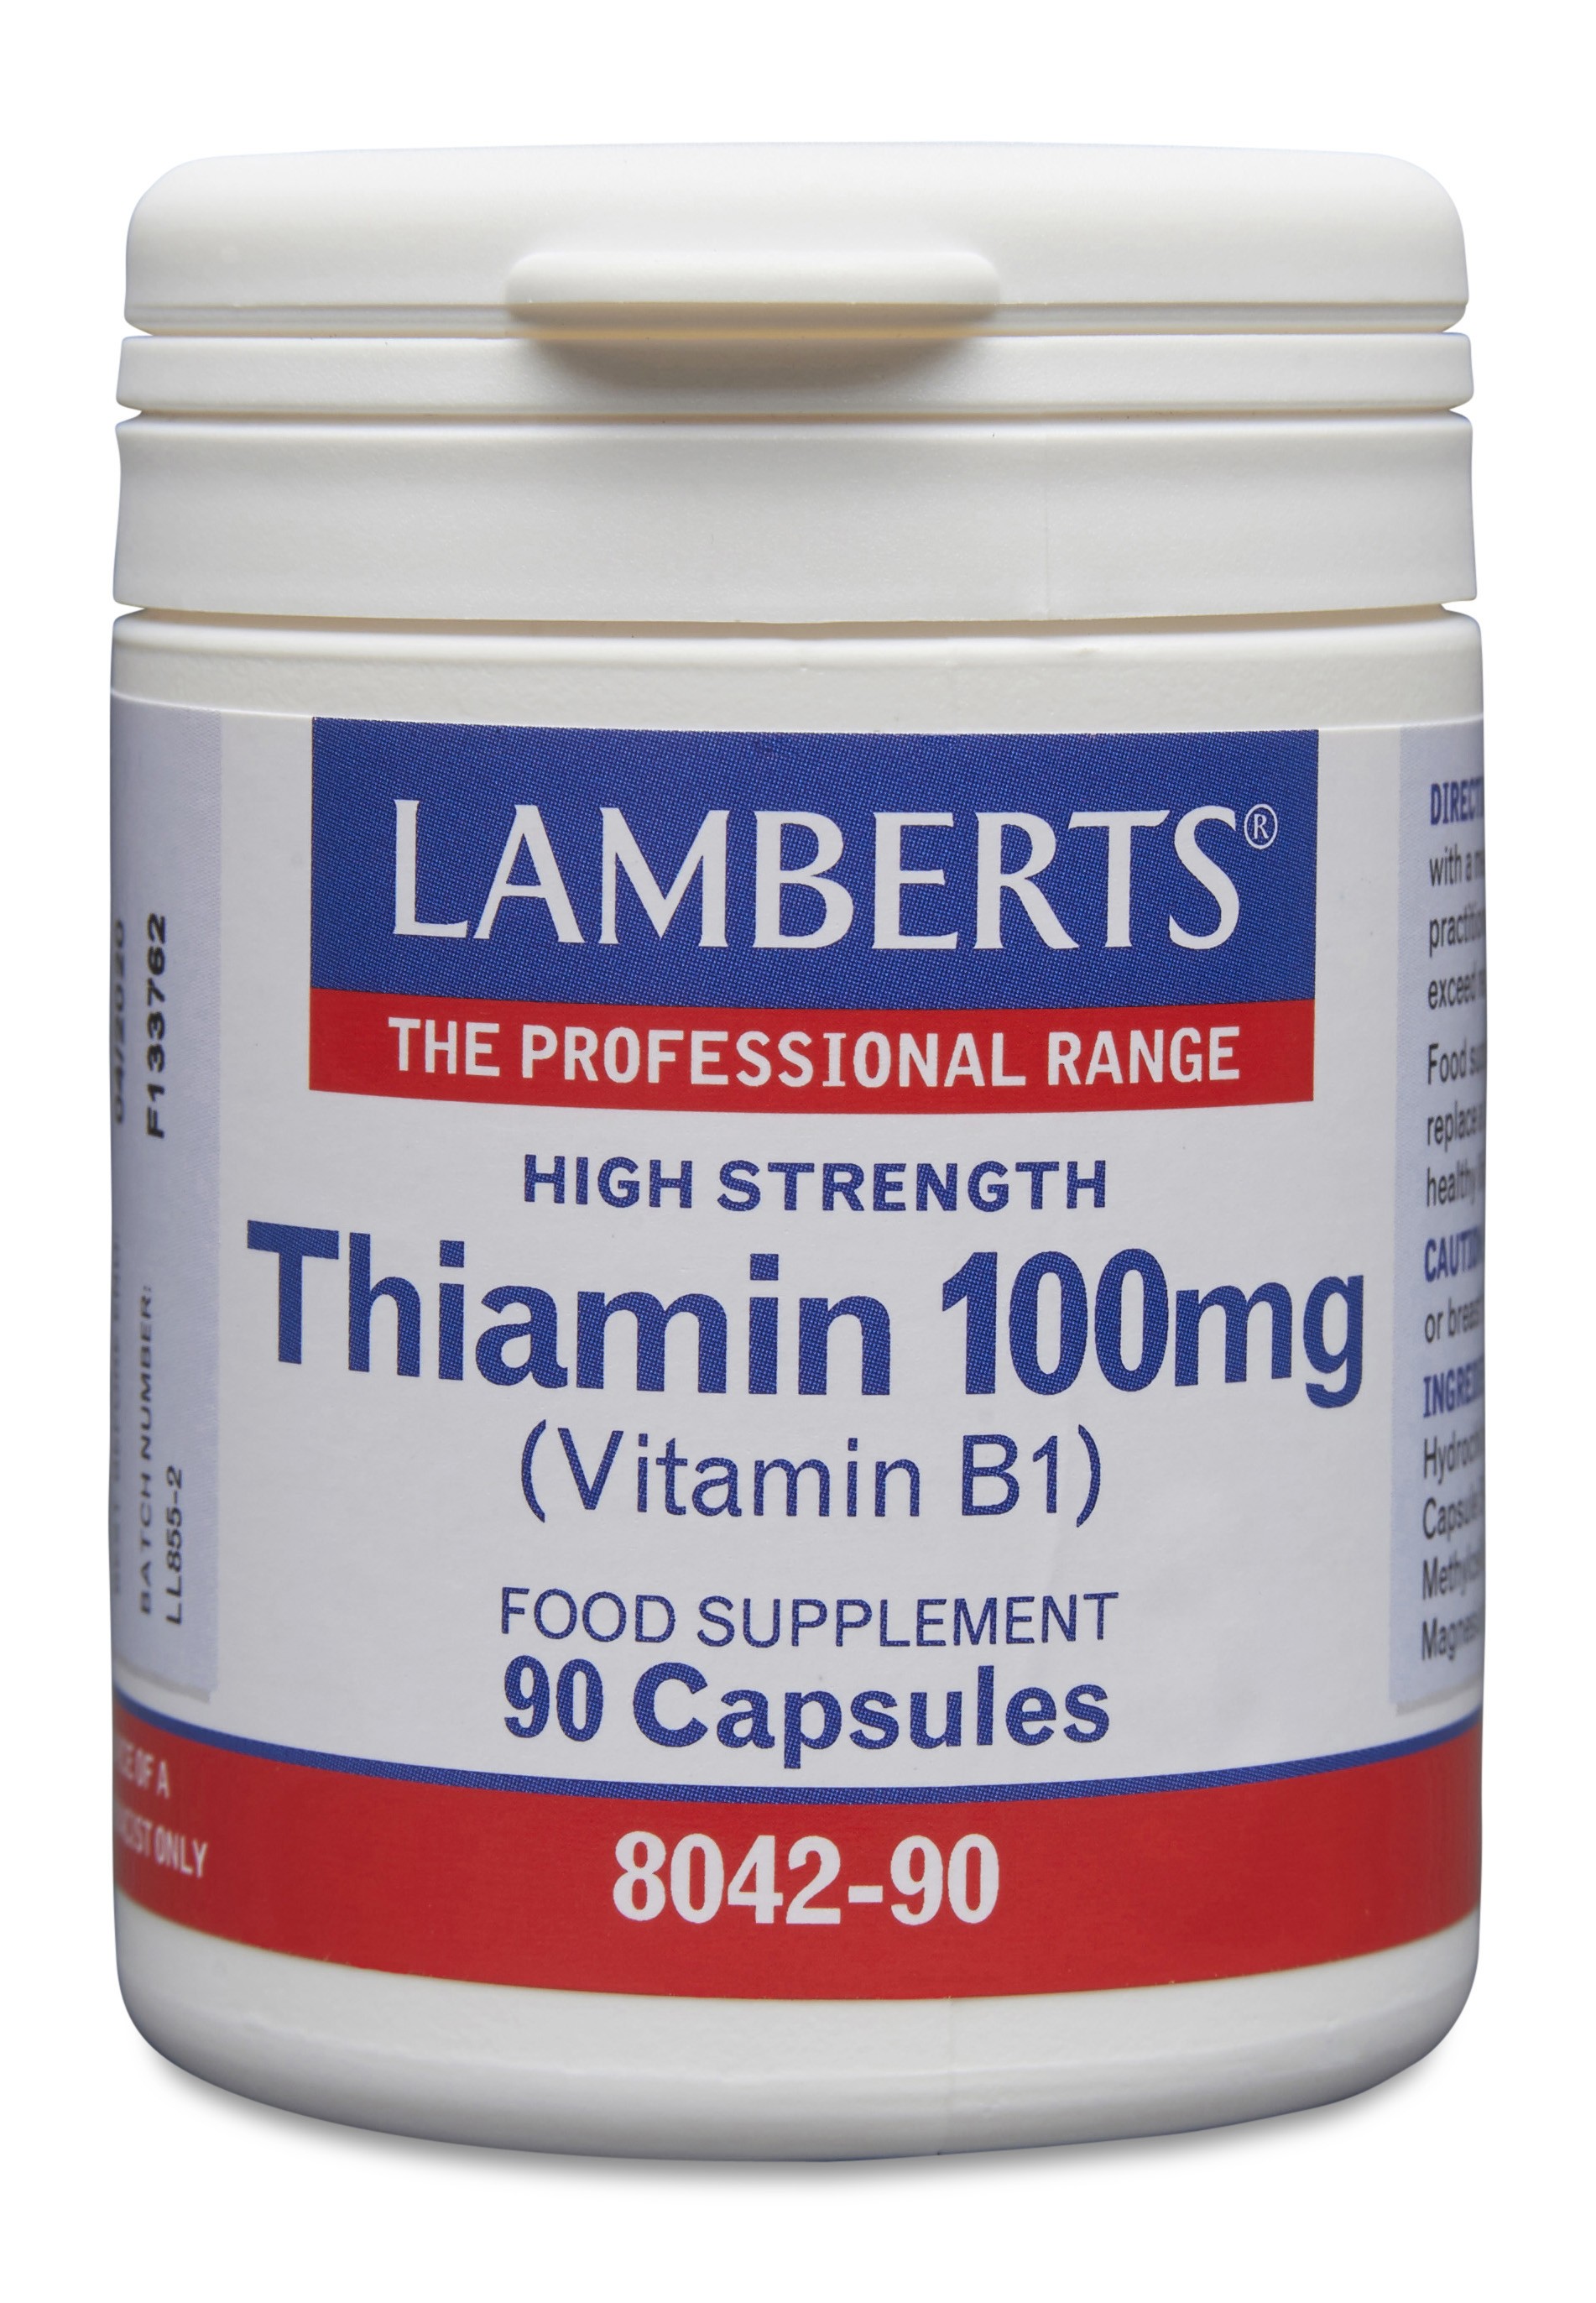 Lamberts Thiamin 100mg (Vitamin B1)